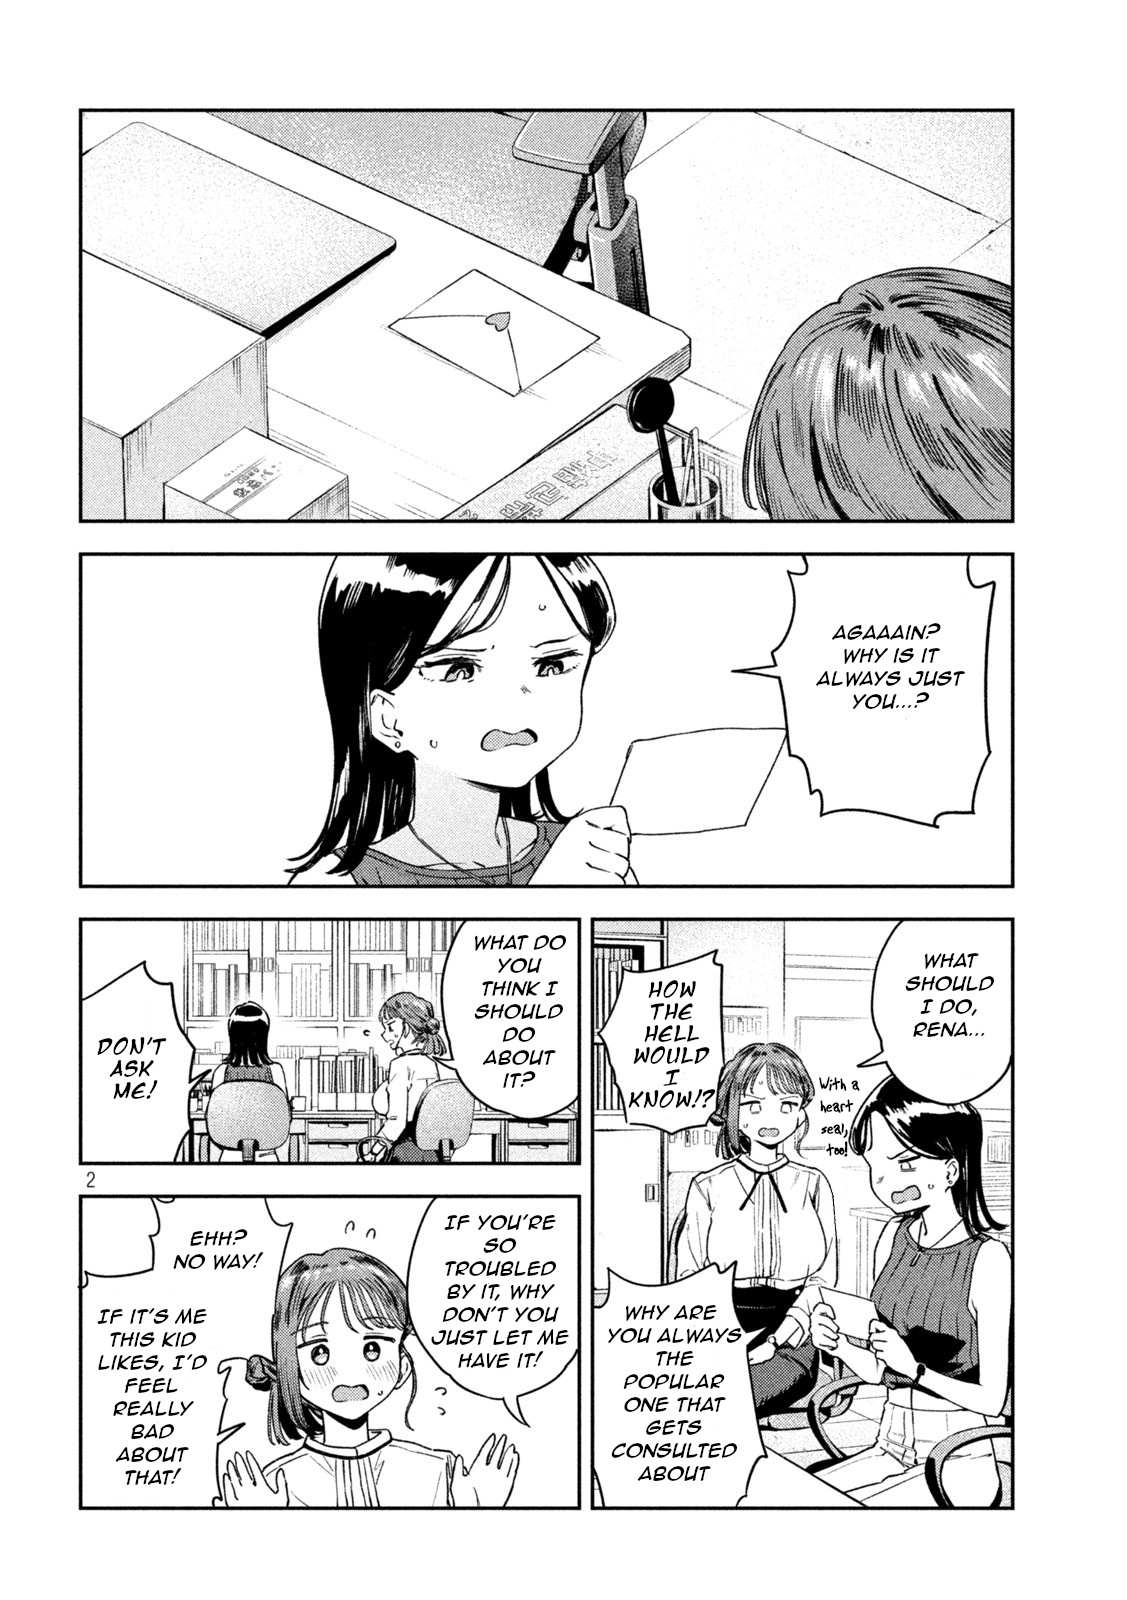 Miyo-Chan Sensei Said So - chapter 5 - #2